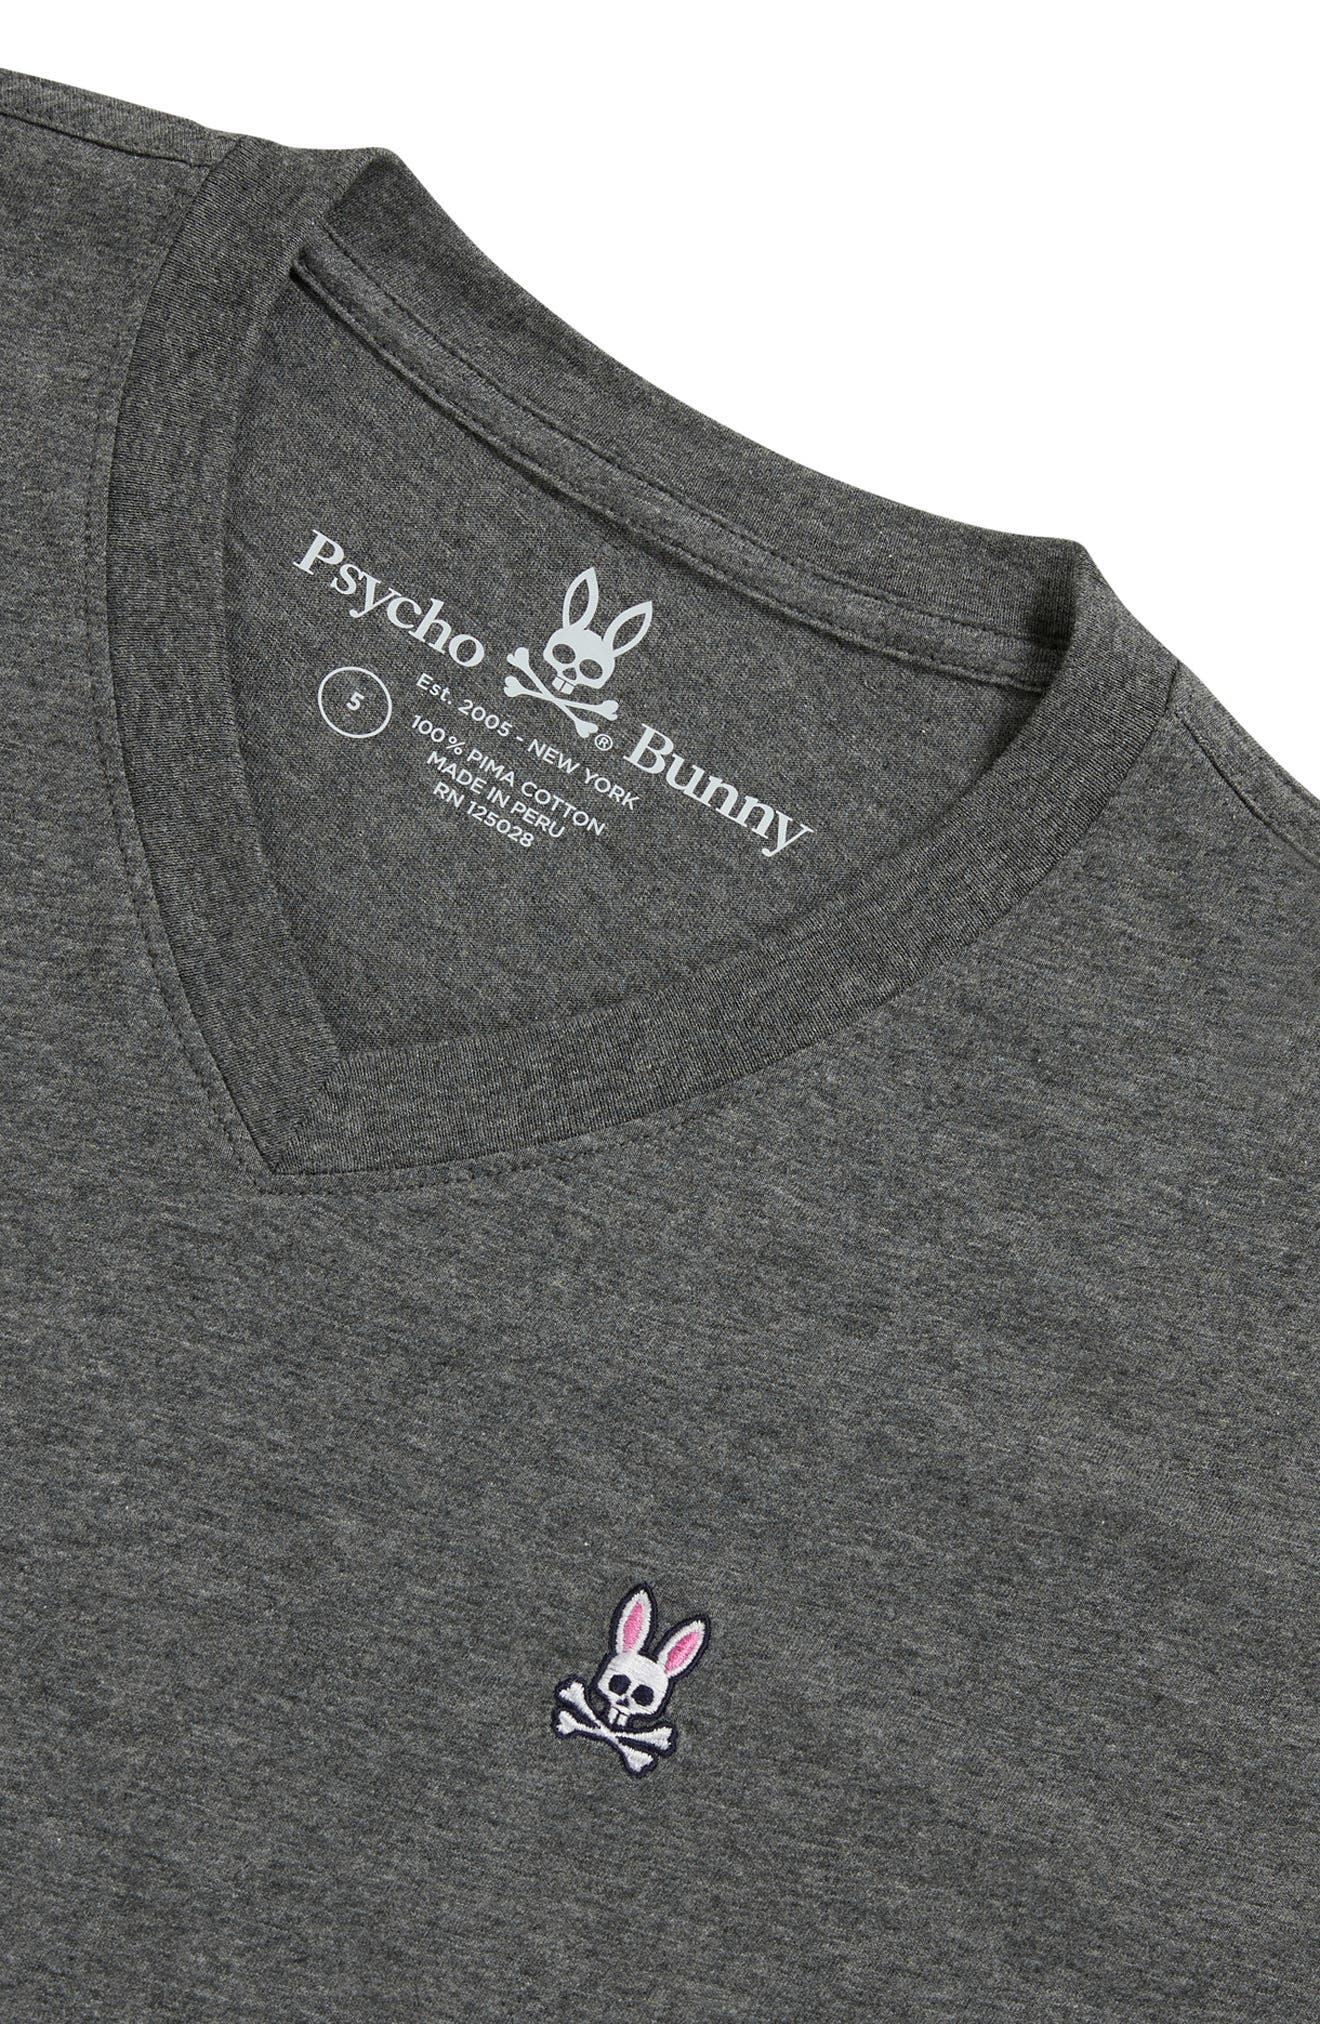 Psycho Bunny Men's Applique Bunny Logo V-Neck Cotton Blend Short Sleeve T-Shirt 